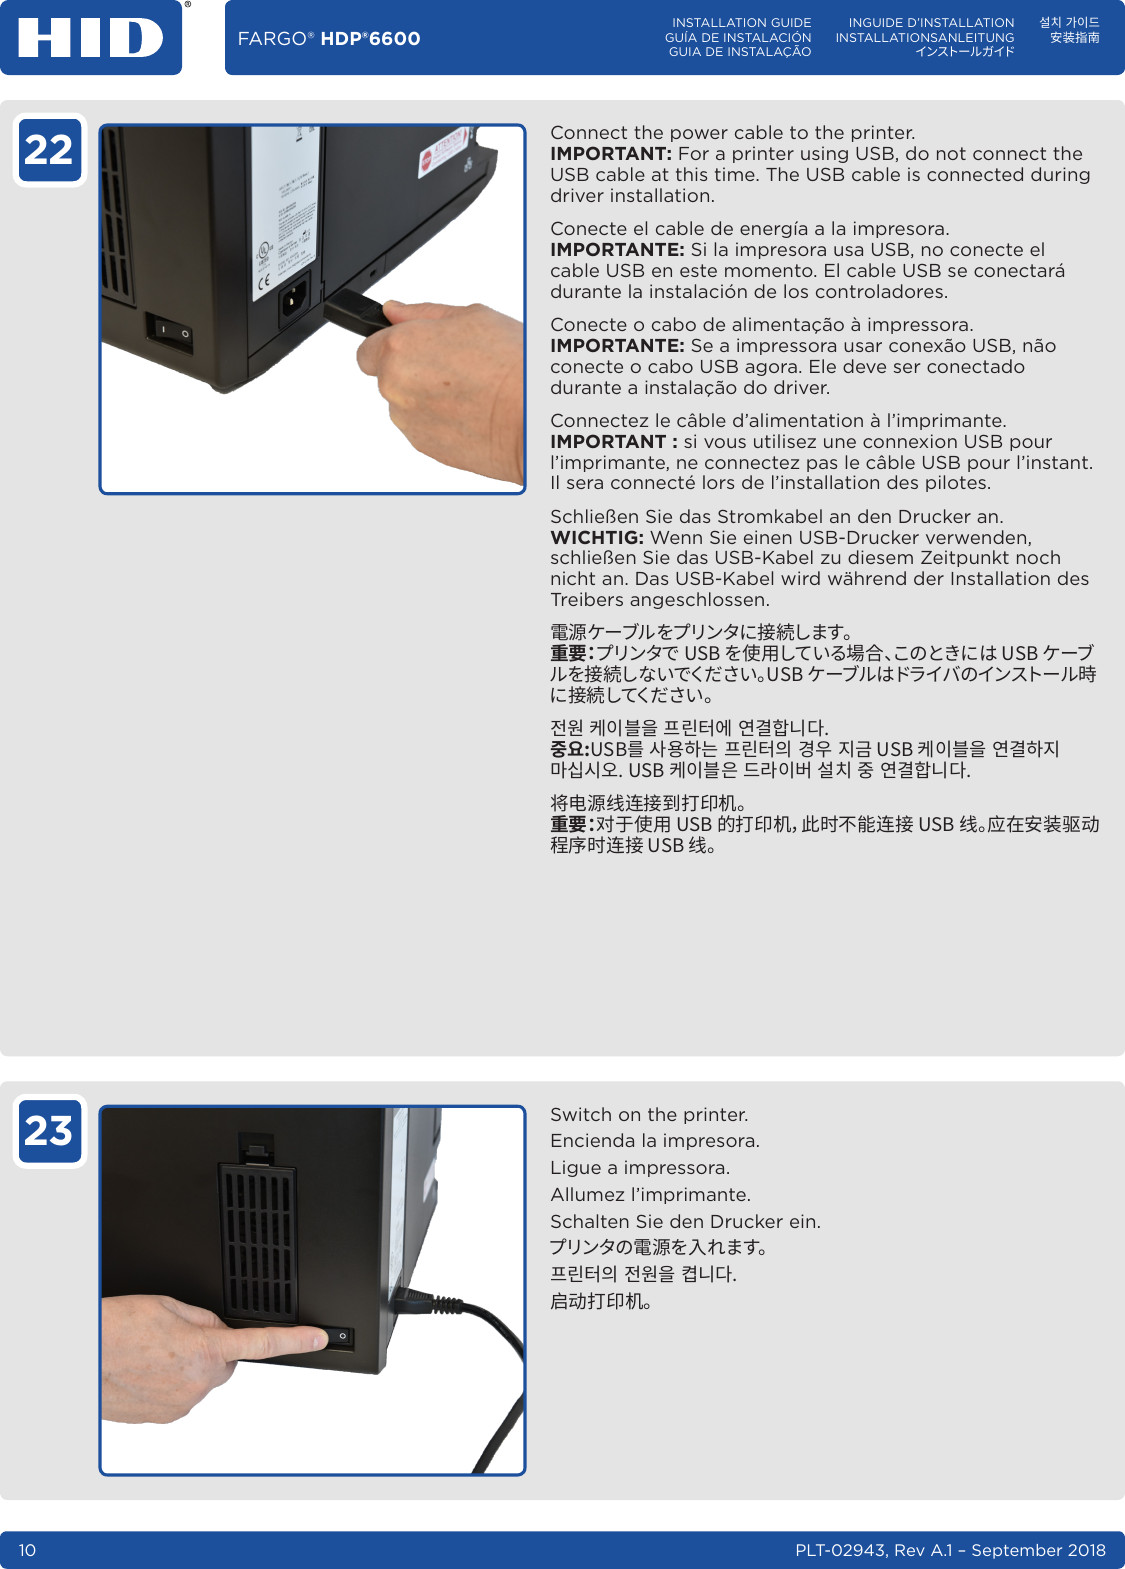 PLT-02943, Rev A.1 – September 201810FARGO® HDP®6600 INSTALLATION GUIDEGUÍA DE INSTALACIÓNGUIA DE INSTALAÇÃOINGUIDE D’INSTALLATIONINSTALLATIONSANLEITUNGインスト ー ル ガ イド설치 가이드安装指南22 Connect the power cable to the printer. IMPORTANT: For a printer using USB, do not connect the USB cable at this time. The USB cable is connected during driver installation.Conecte el cable de energía a la impresora. IMPORTANTE: Si la impresora usa USB, no conecte el cable USB en este momento. El cable USB se conectará durante la instalación de los controladores.Conecte o cabo de alimentação à impressora. IMPORTANTE: Se a impressora usar conexão USB, não conecte o cabo USB agora. Ele deve ser conectado durante a instalação do driver.Connectez le câble d’alimentation à l’imprimante. IMPORTANT: si vous utilisez une connexion USB pour l’imprimante, ne connectez pas le câble USB pour l’instant. Il sera connecté lors de l’installation des pilotes.Schließen Sie das Stromkabel an den Drucker an. WICHTIG: Wenn Sie einen USB-Drucker verwenden, schließen Sie das USB-Kabel zu diesem Zeitpunkt noch nicht an. Das USB-Kabel wird während der Installation des Treibers angeschlossen.電源ケーブルをプリンタに接続します。 重 要：プリンタで USB を使用している場合、このときには USB ケーブルを接続しないでください。USB ケーブルはドライバのインストール時に 接 続 してくだ さい 。󻳓󻮟󽴔󼏏󻱃󻋣󻰓󽴔󼧓󺹿󼗿󻪟󽴔󻪿󺅿󼨸󺞗󺞳󻷠󻭣󺹋󽴔󻕻󻭸󼨧󺝣󽴔󼧓󺹿󼗿󻰧󽴔󺆌󻭿󽴔󻺏󺋗󼏏󻱃󻋣󻰓󽴔󻪿󺅿󼨧󻺏󺺗󻞼󻞫󻫳󼏏󻱃󻋣󻰏󽴔󺦫󺱋󻱃󻅓󽴔󻗳󼌧󽴔󻷠󽴔󻪿󺅿󼨸󺞗󺞳将电源线连接到打印机。 重要：对于使用 USB 的打印机，此时不能连接 USB 线。应在安装驱动程序时连接 USB 线。23 Switch on the printer.Encienda la impresora.Ligue a impressora.Allumez l’imprimante.Schalten Sie den Drucker ein.プリンタの 電 源 を入 れ ます。󼧓󺹿󼗿󻰧󽴔󻳓󻮟󻰓󽴔󼏼󺞗󺞳启动打印机。